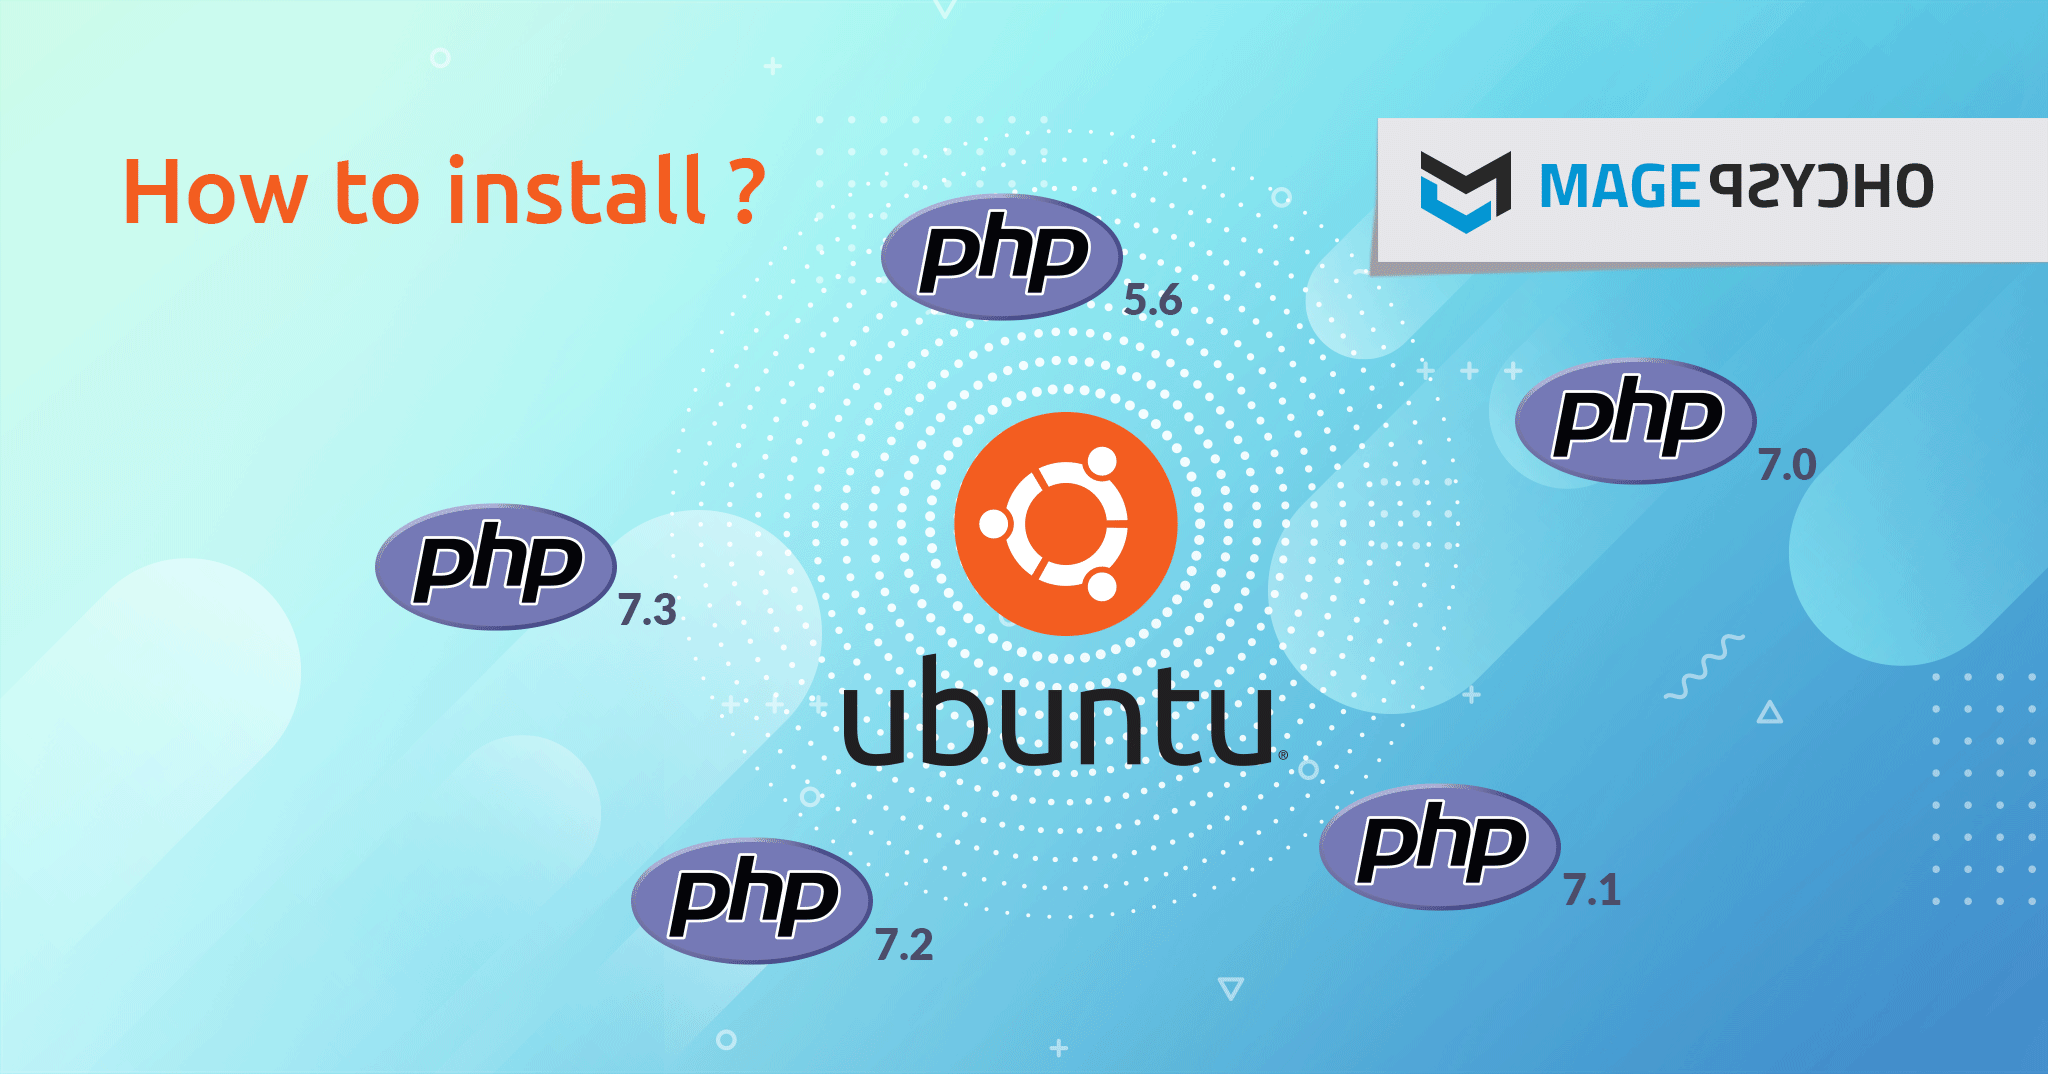 Installing PHP on Ubuntu 20.04